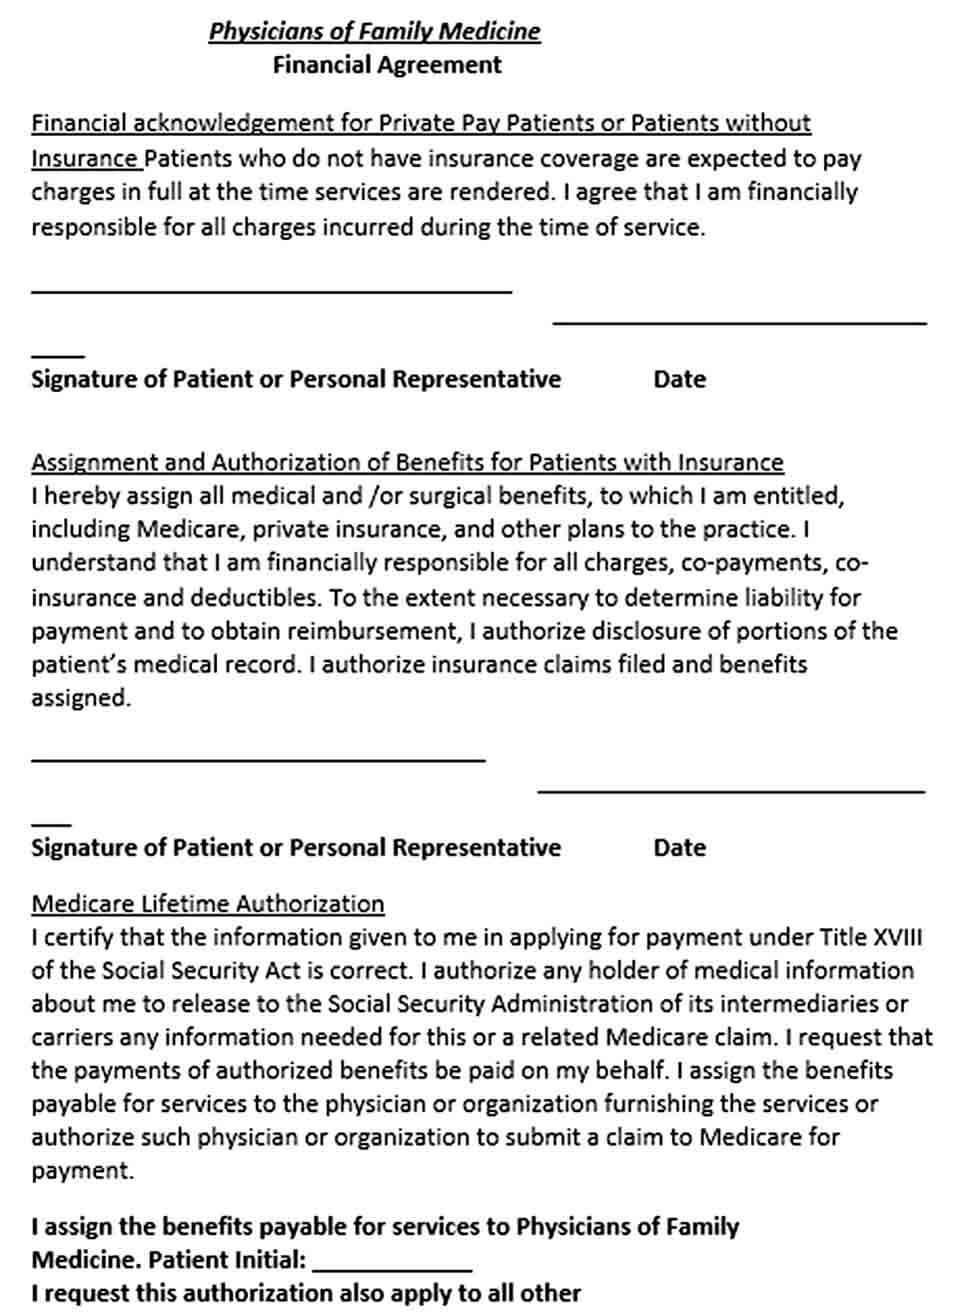 Sample Medical Financial Agreement